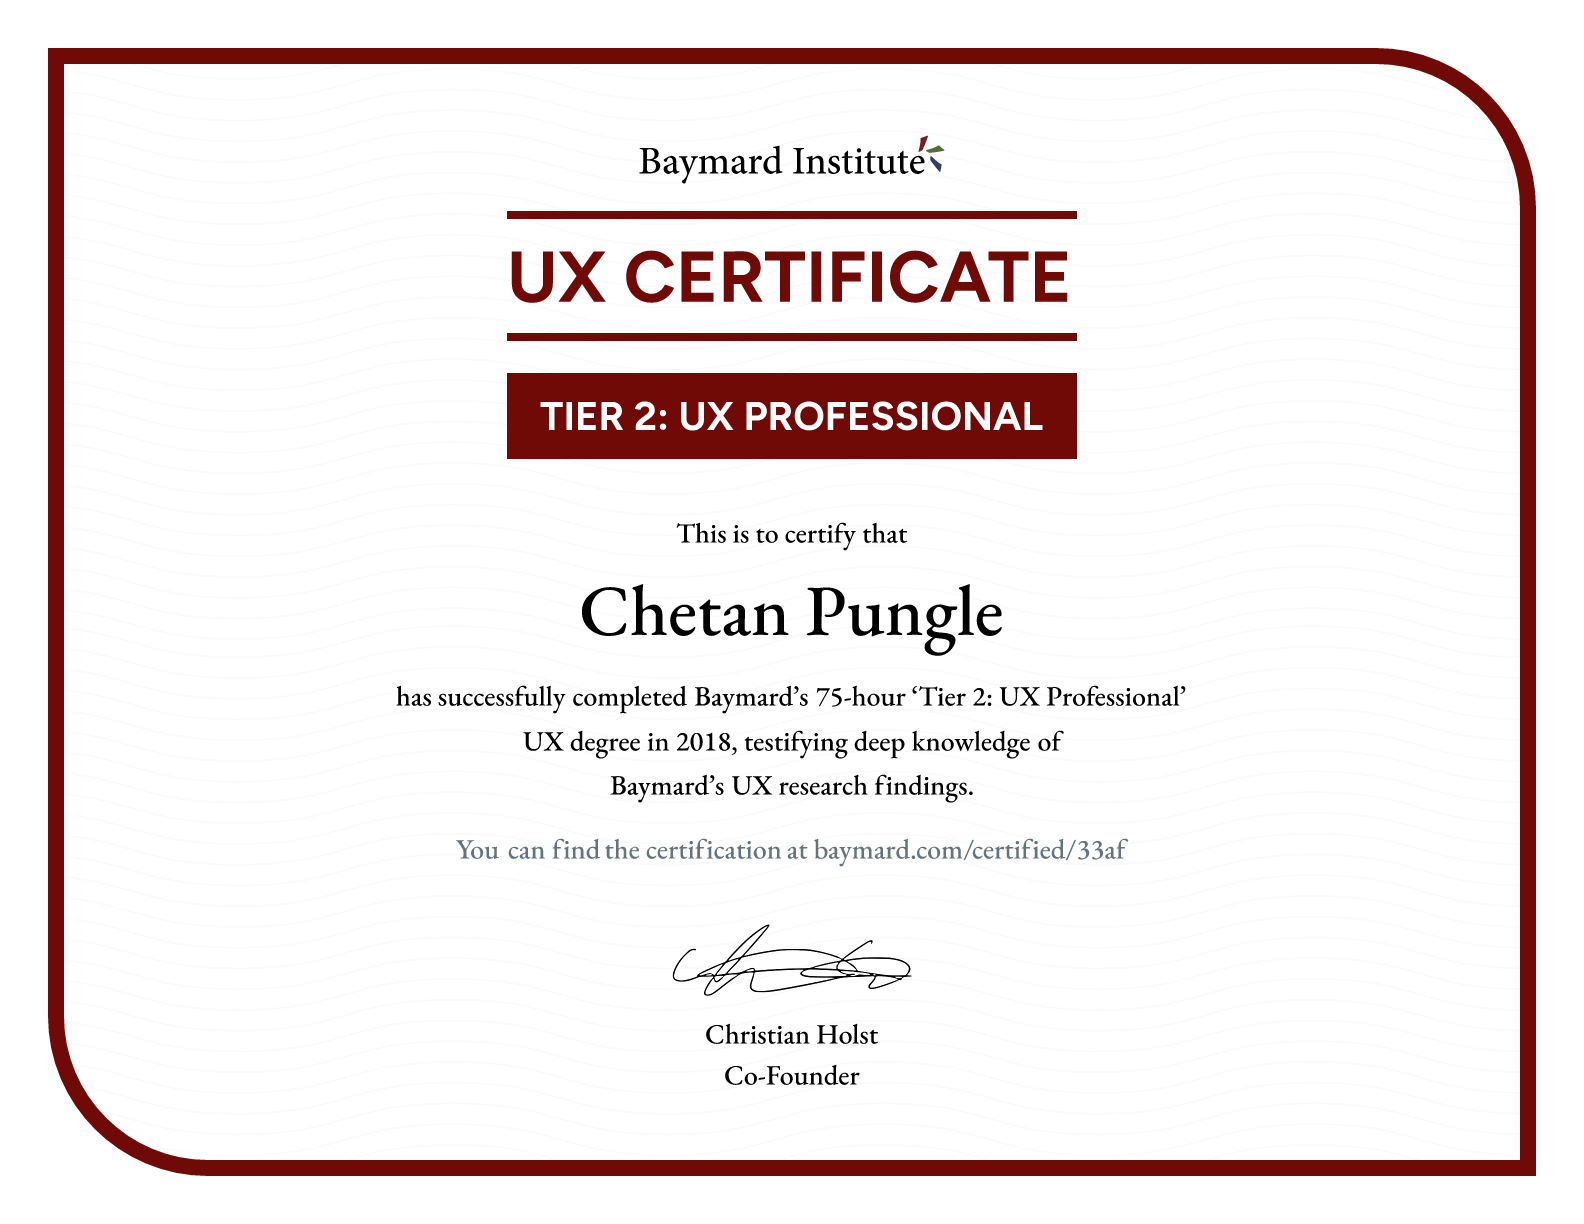 Chetan Pungle’s certificate